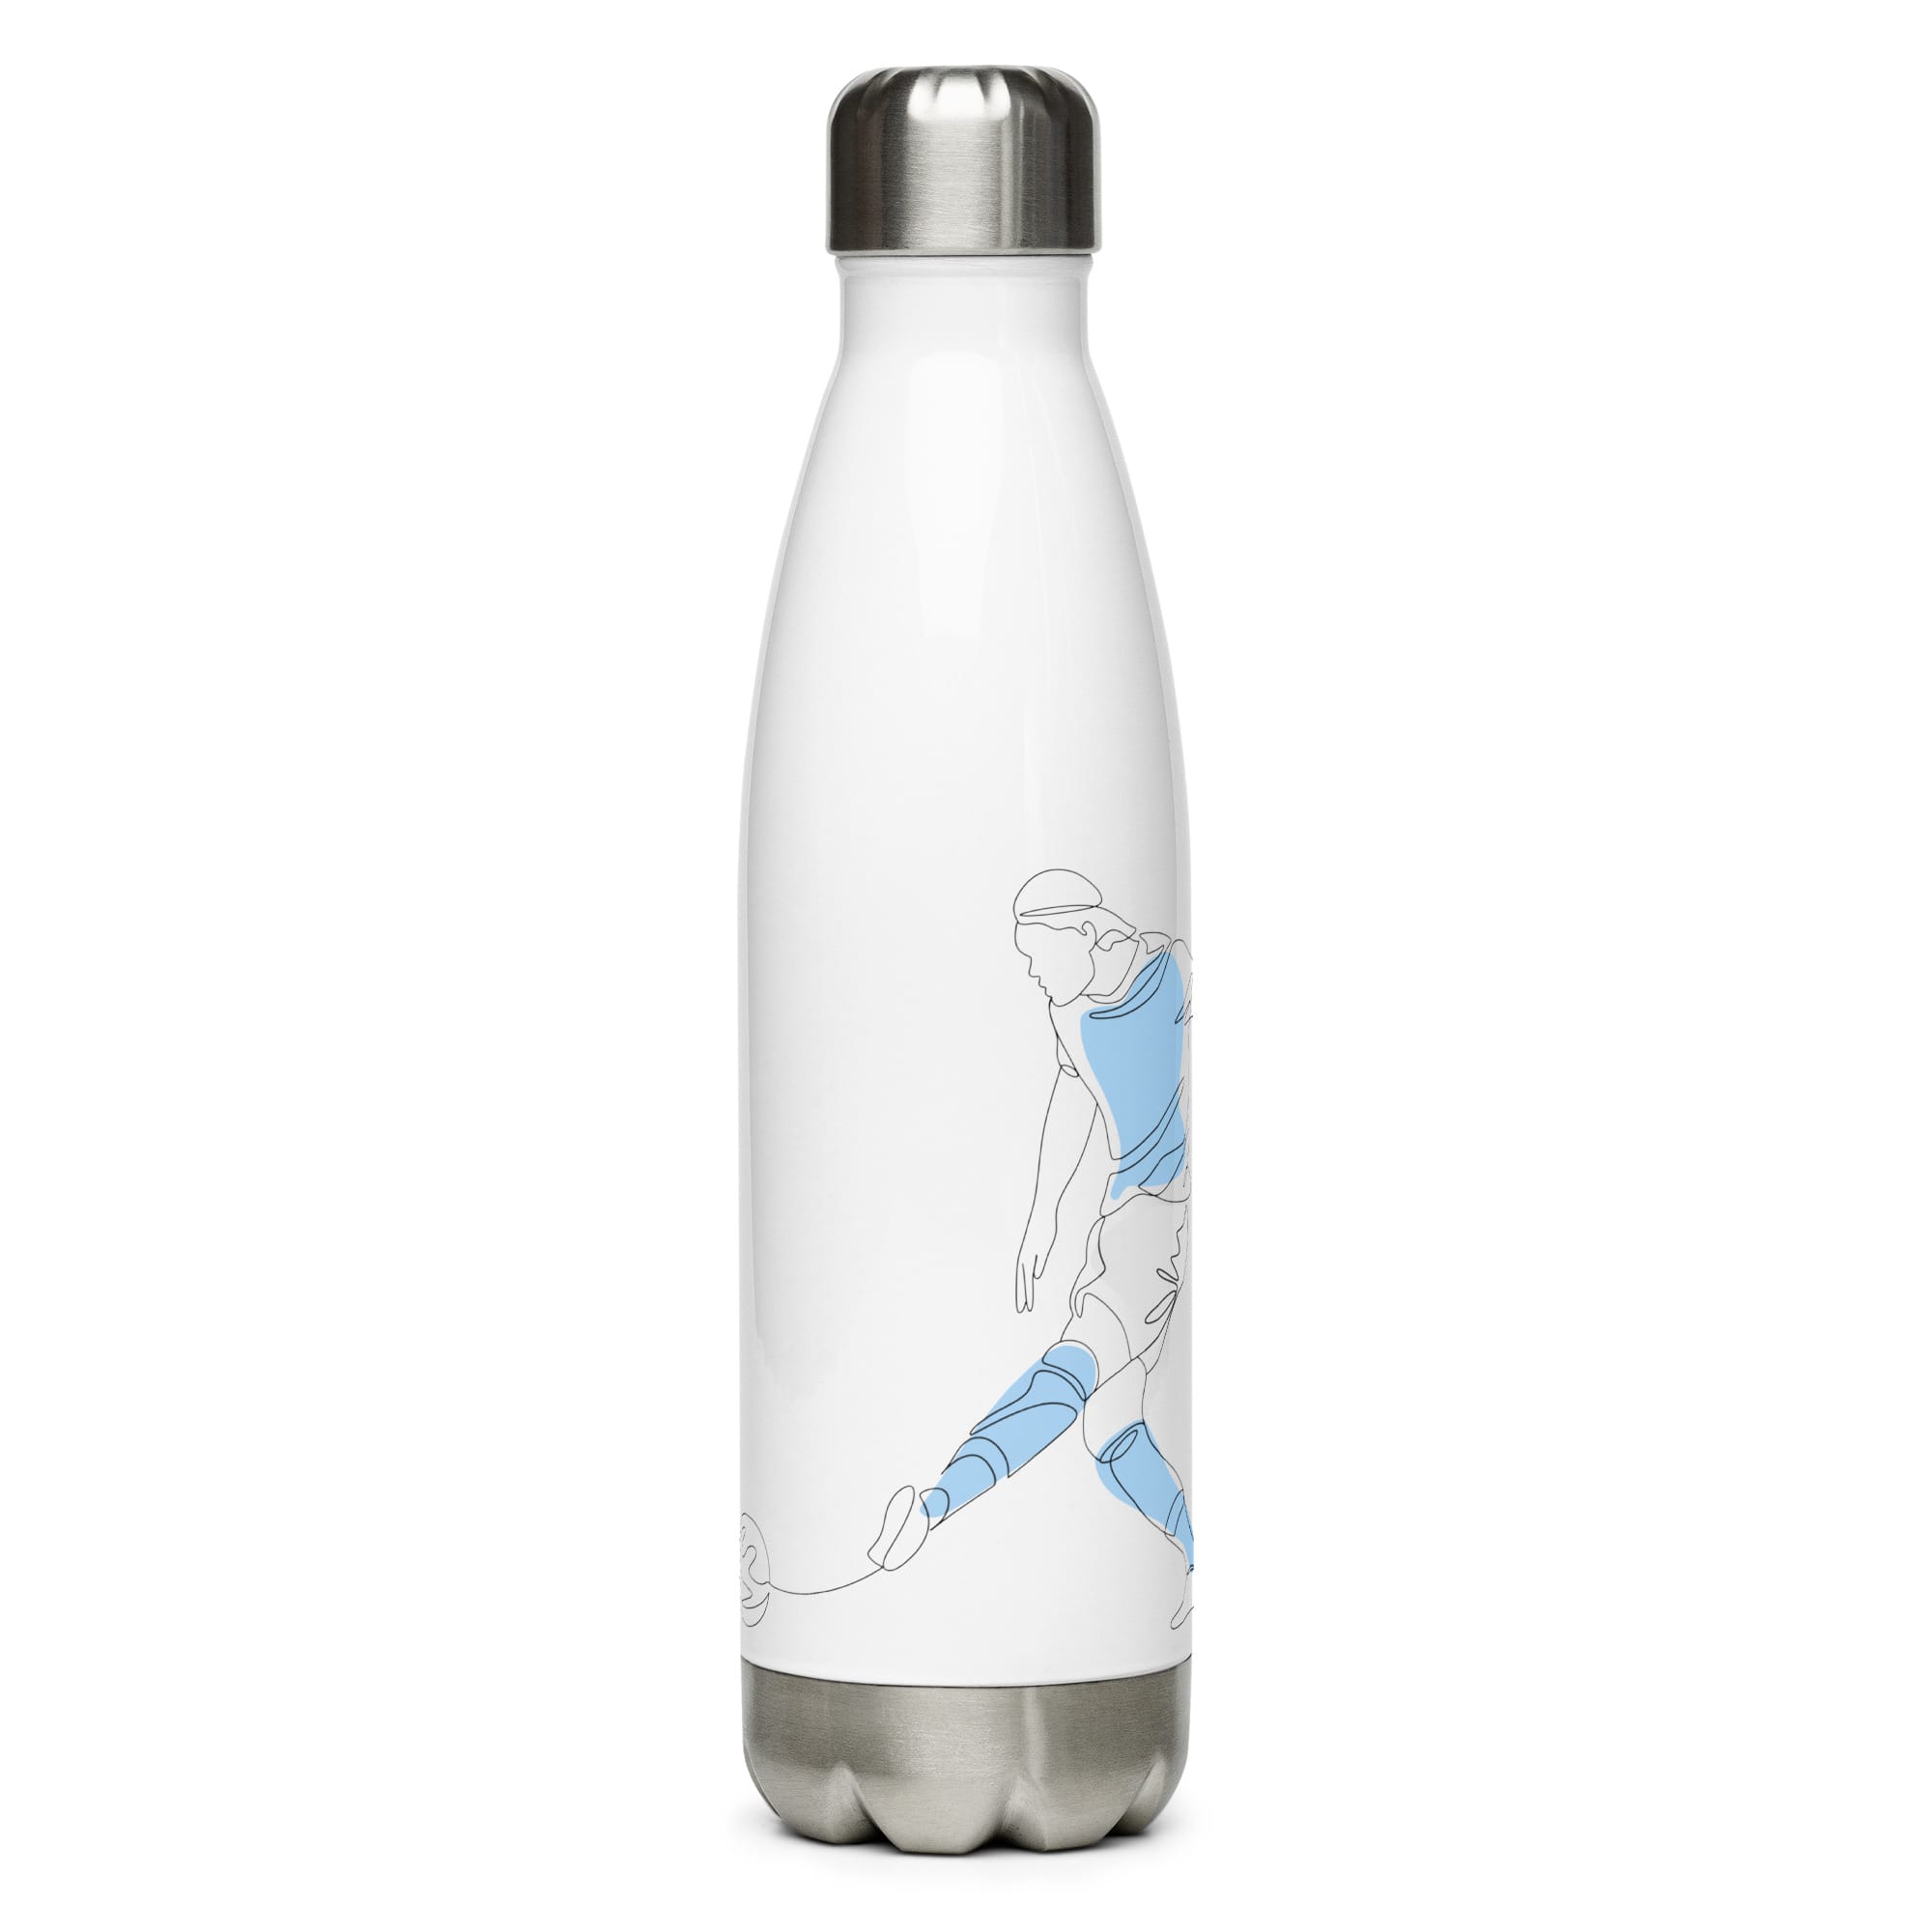 https://ekcqw7fhuue.exactdn.com/wp-content/uploads/2023/04/stainless-steel-water-bottle-white-17oz-right-64391fde5614b.jpg?strip=all&lossy=1&ssl=1